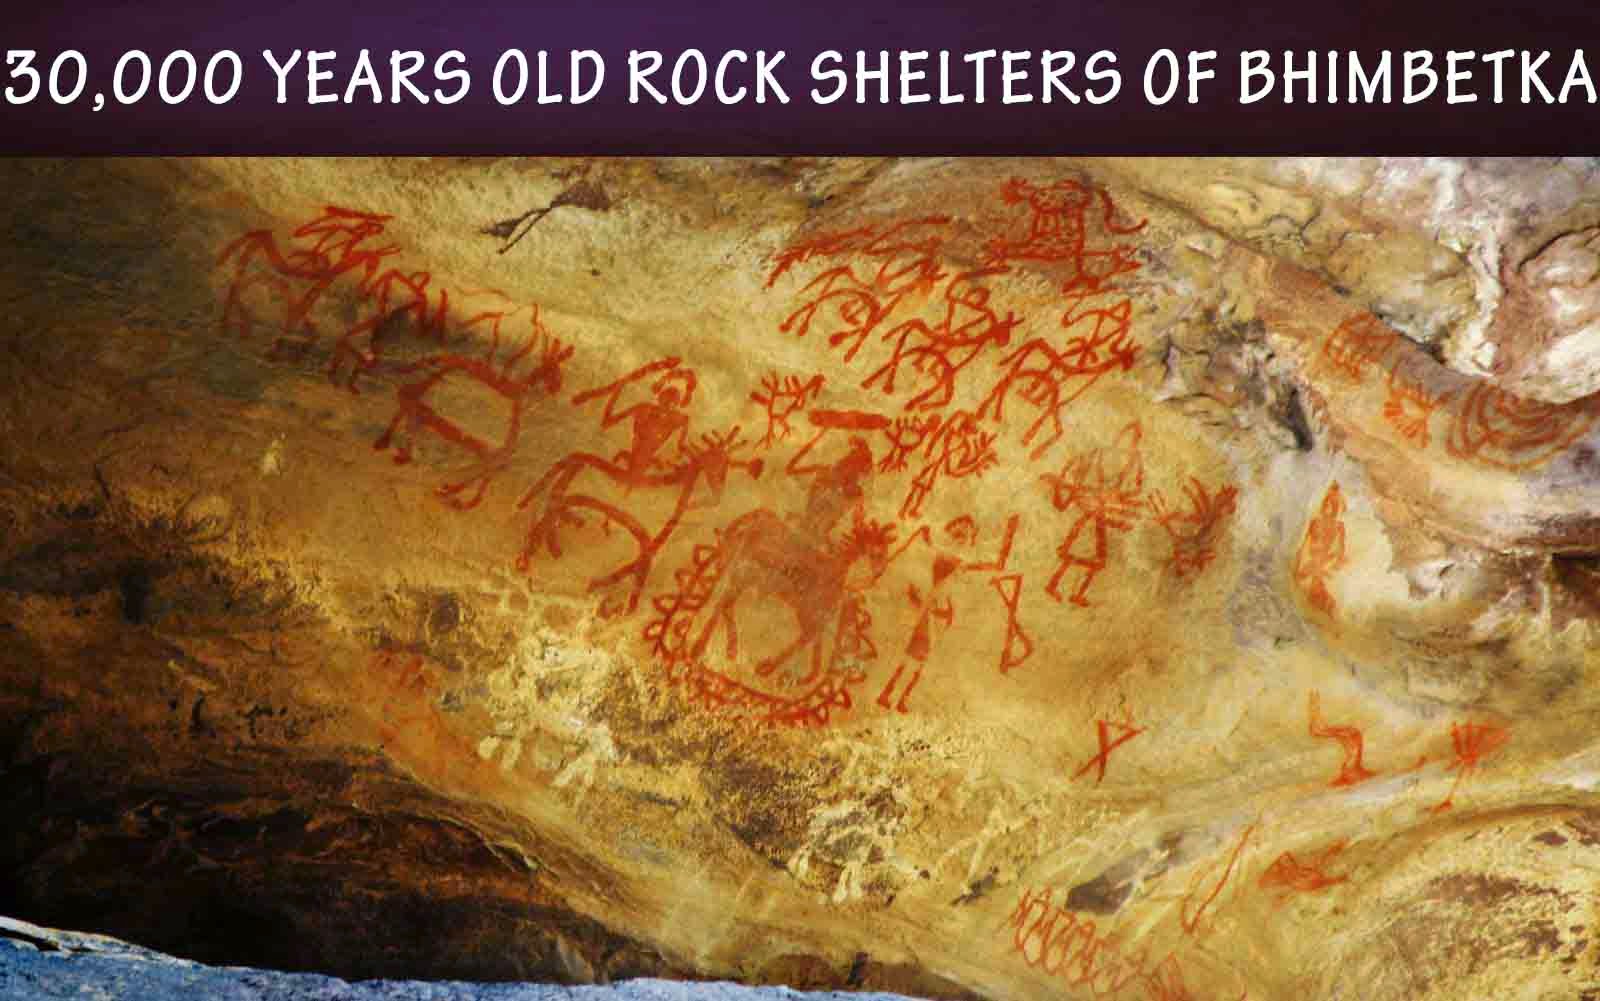 30,000 years old Rock Shelters of Bhimbetka, in Madhya Pradesh, India